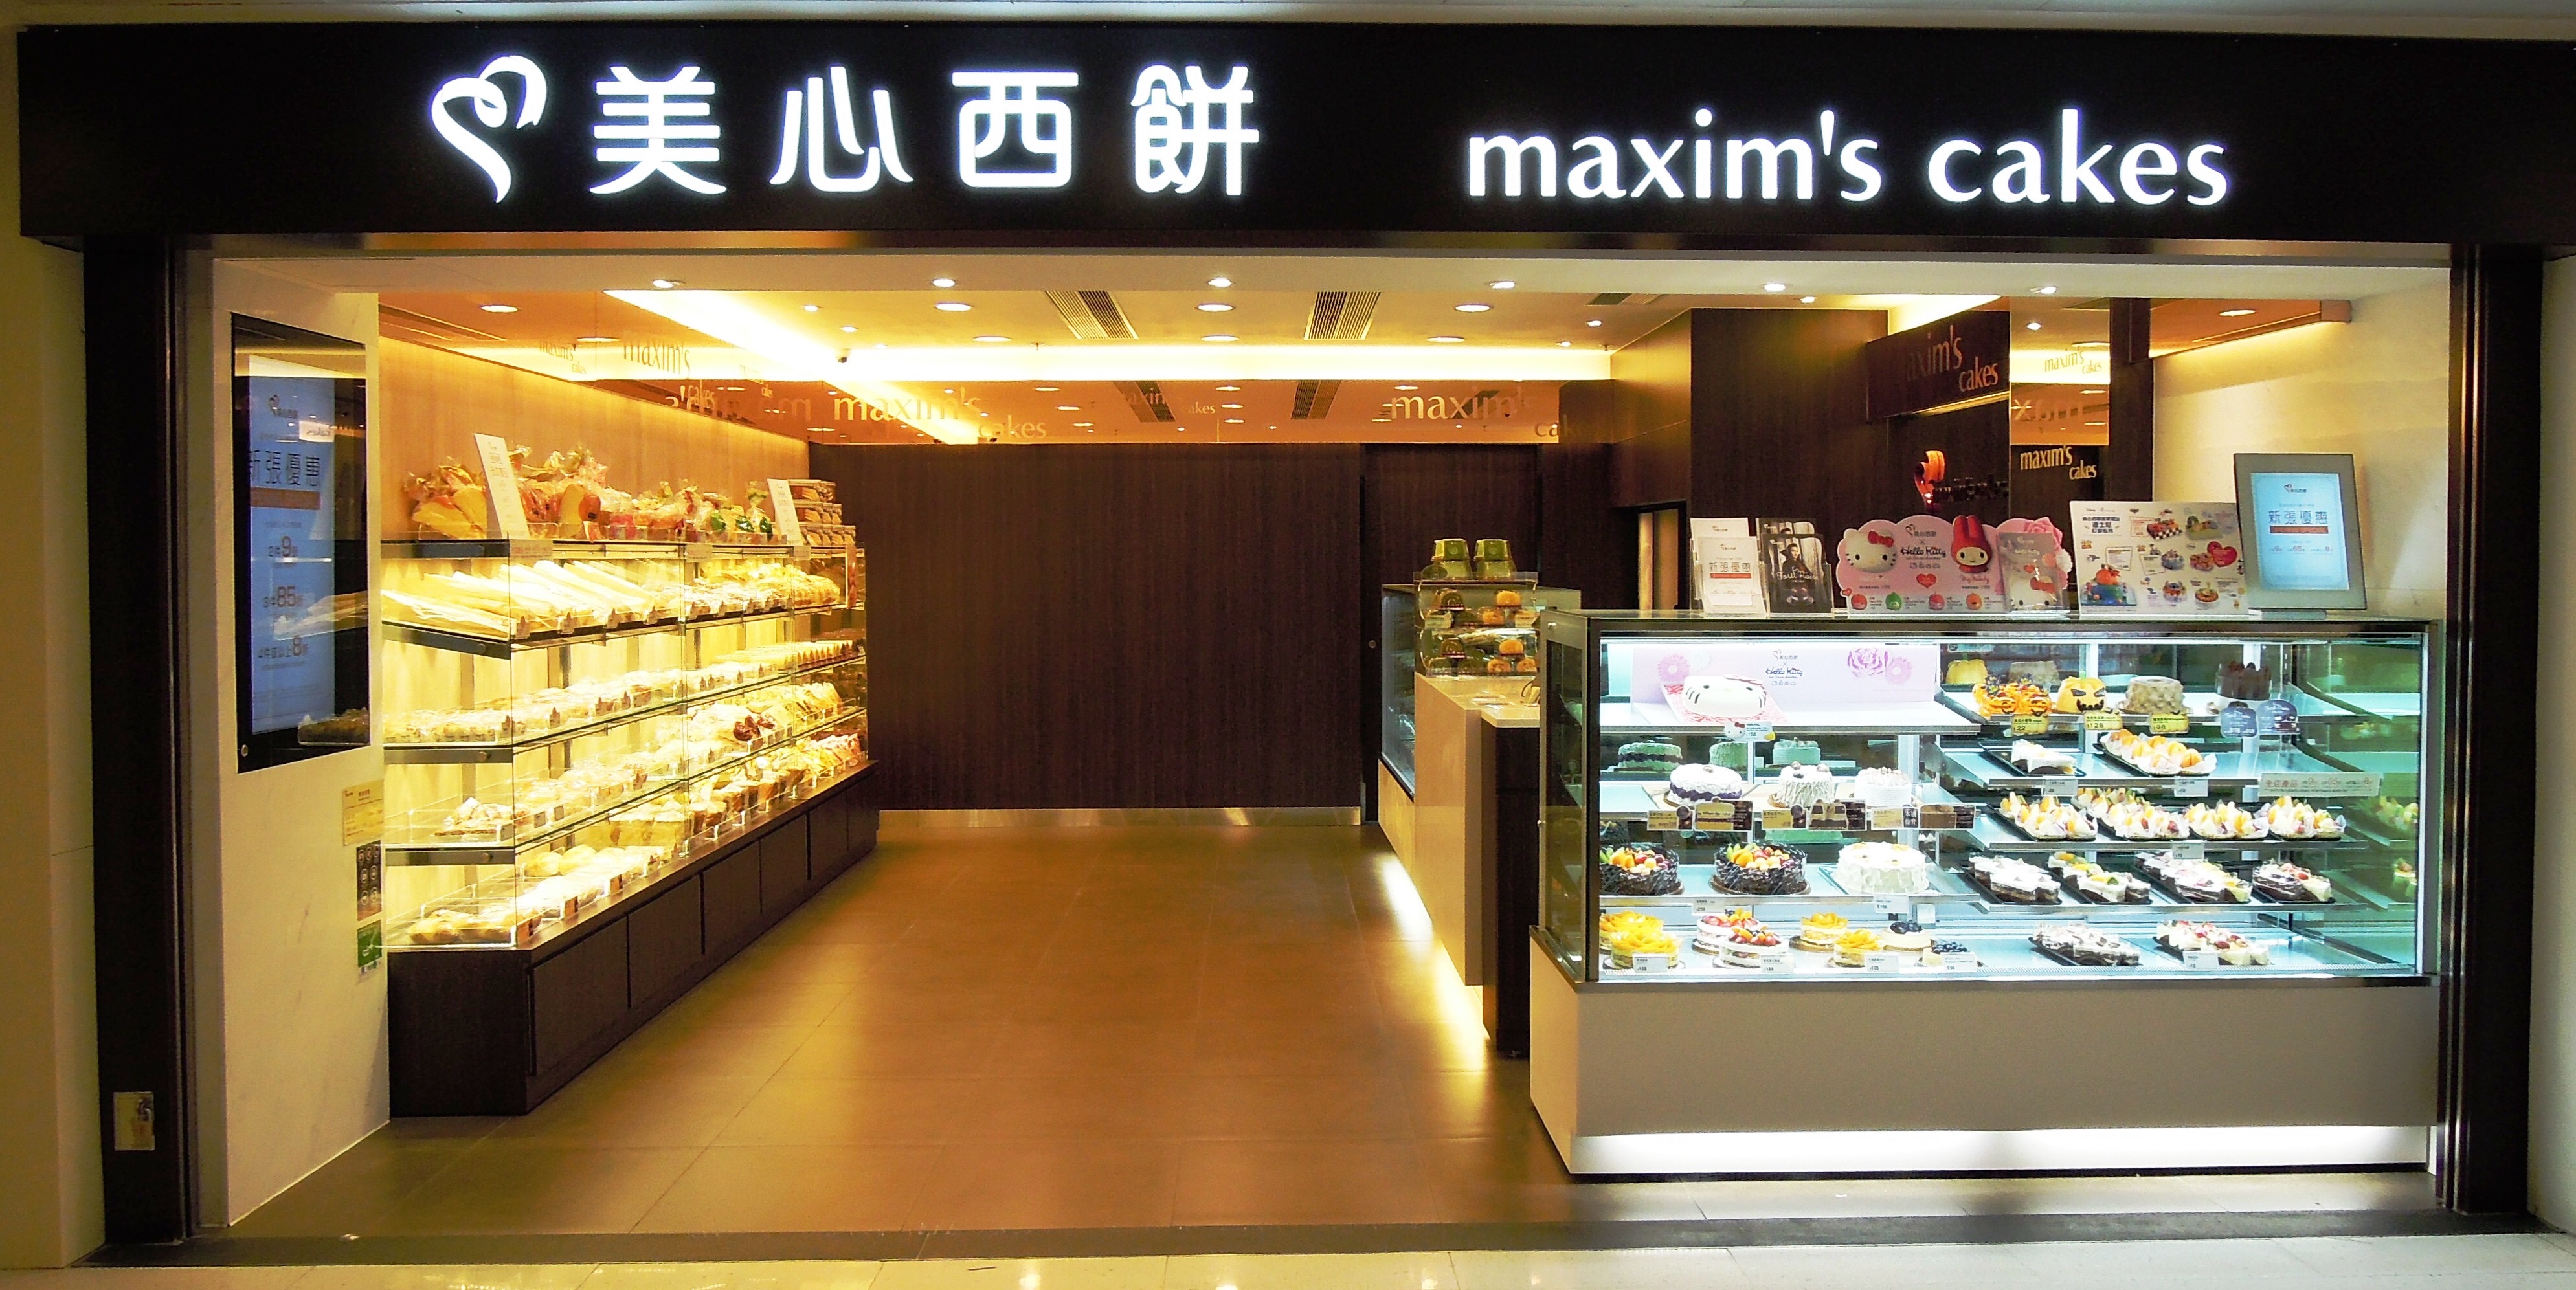 Maxim's Cakes | Cake desserts, Sweet desserts, Desserts